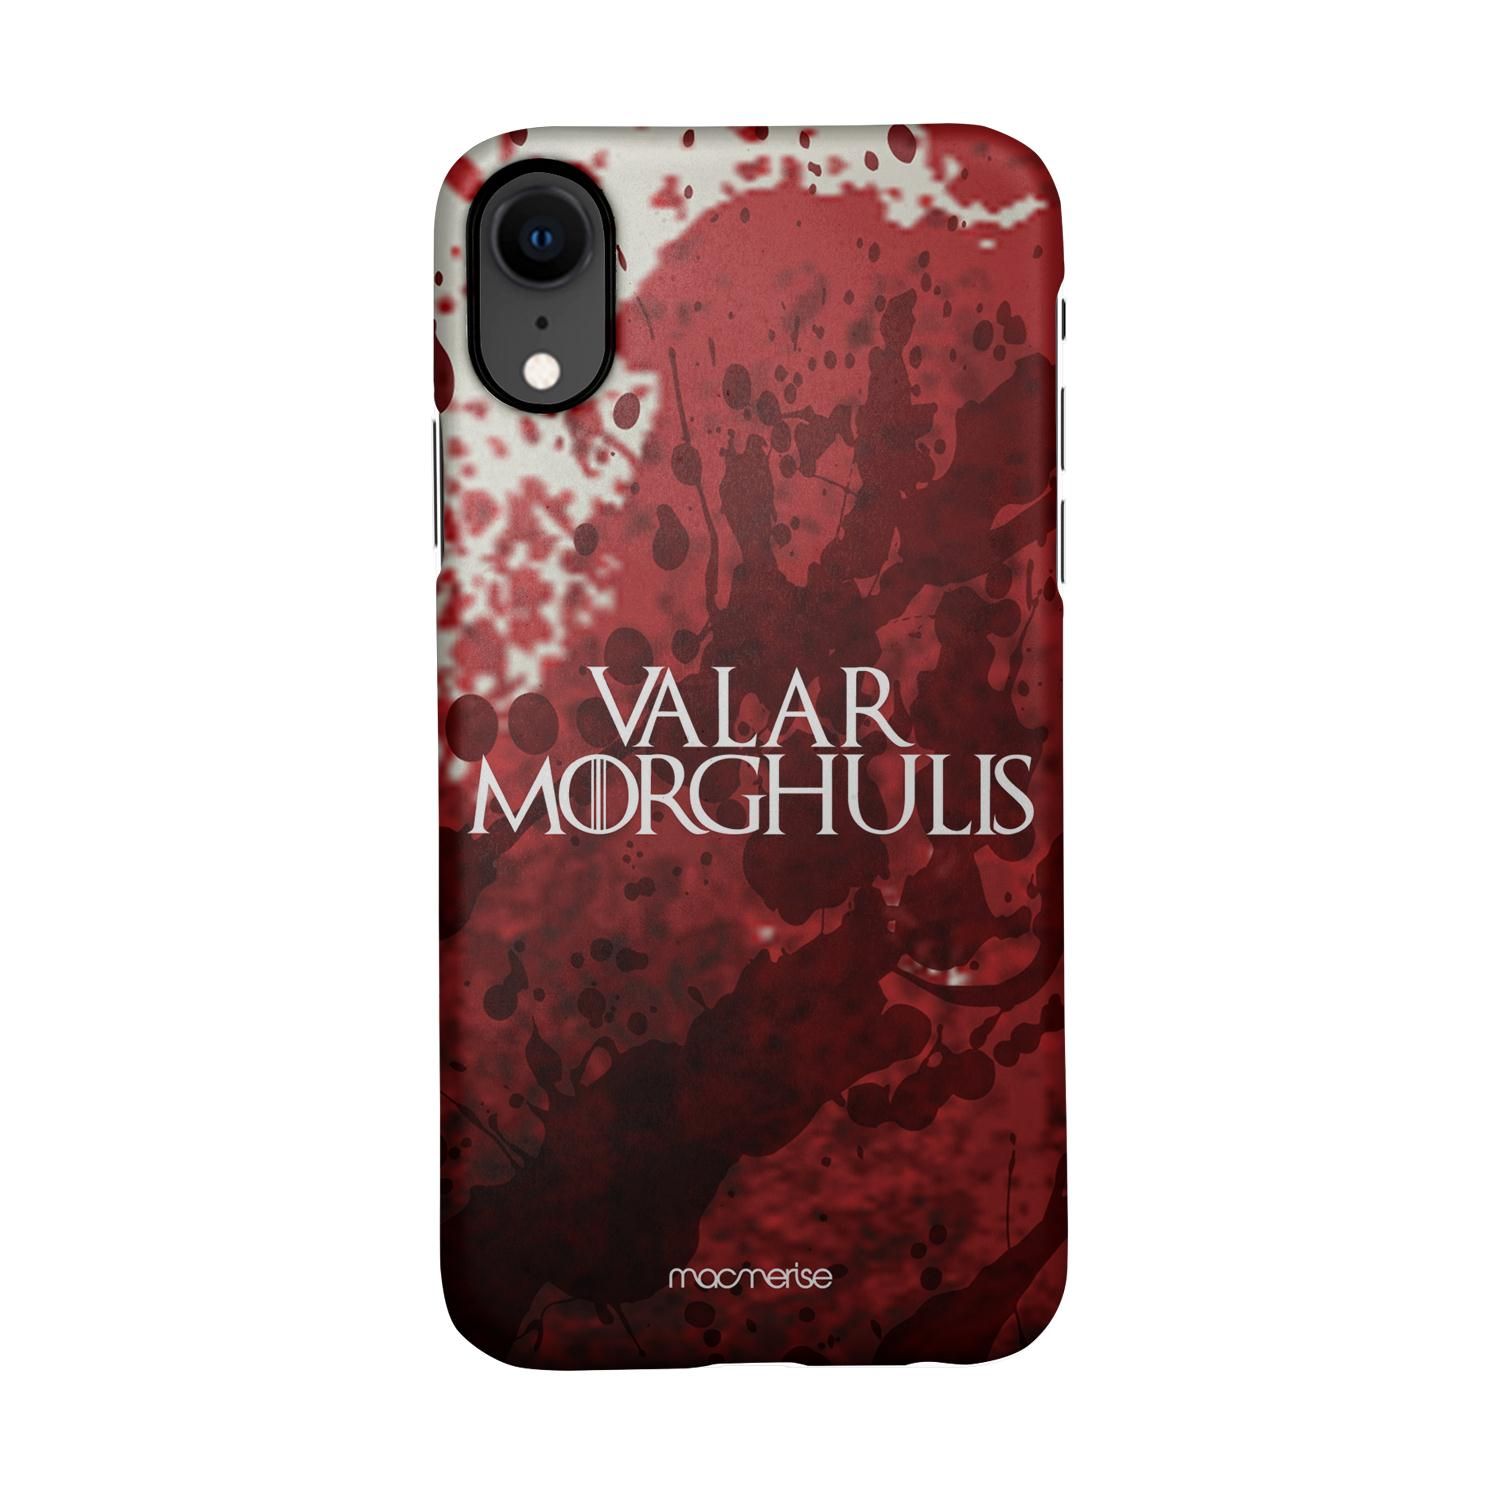 Buy Valar Morghulis - Sleek Phone Case for iPhone XR Online